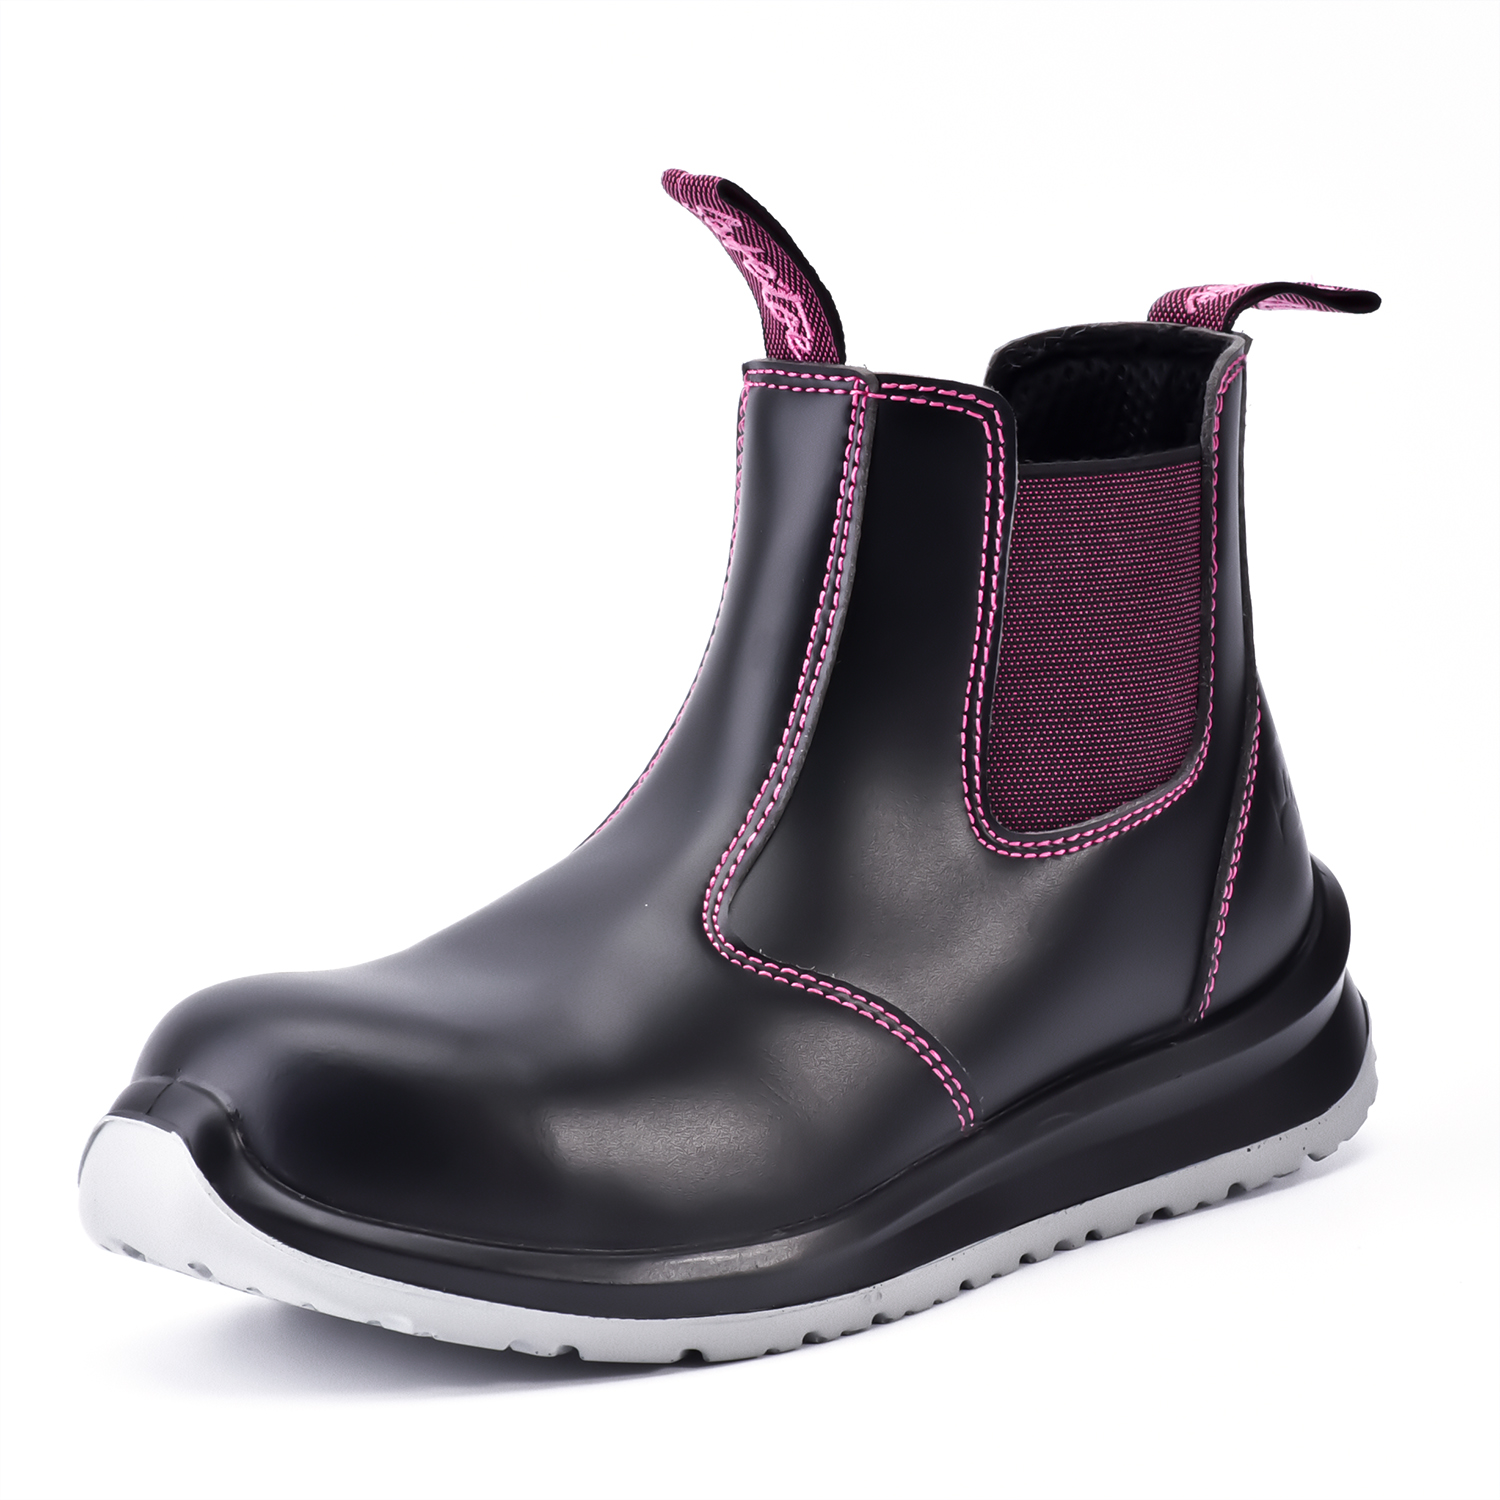 Safetoe Lightweight & Comfort Safety Work Boots for Women